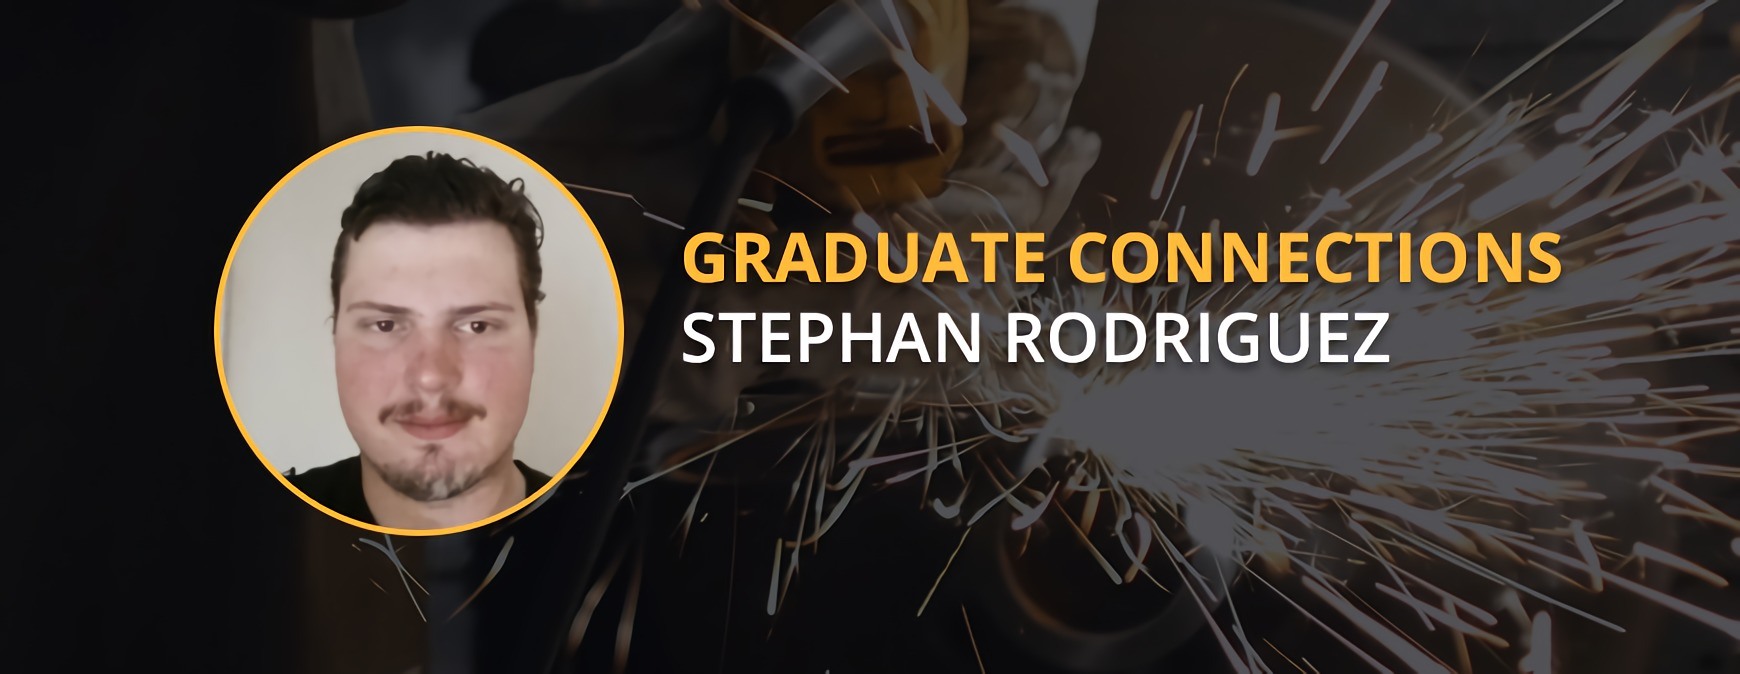 Graduate Connections - Meet Stephan Rodriguez - Tulsa Welding School